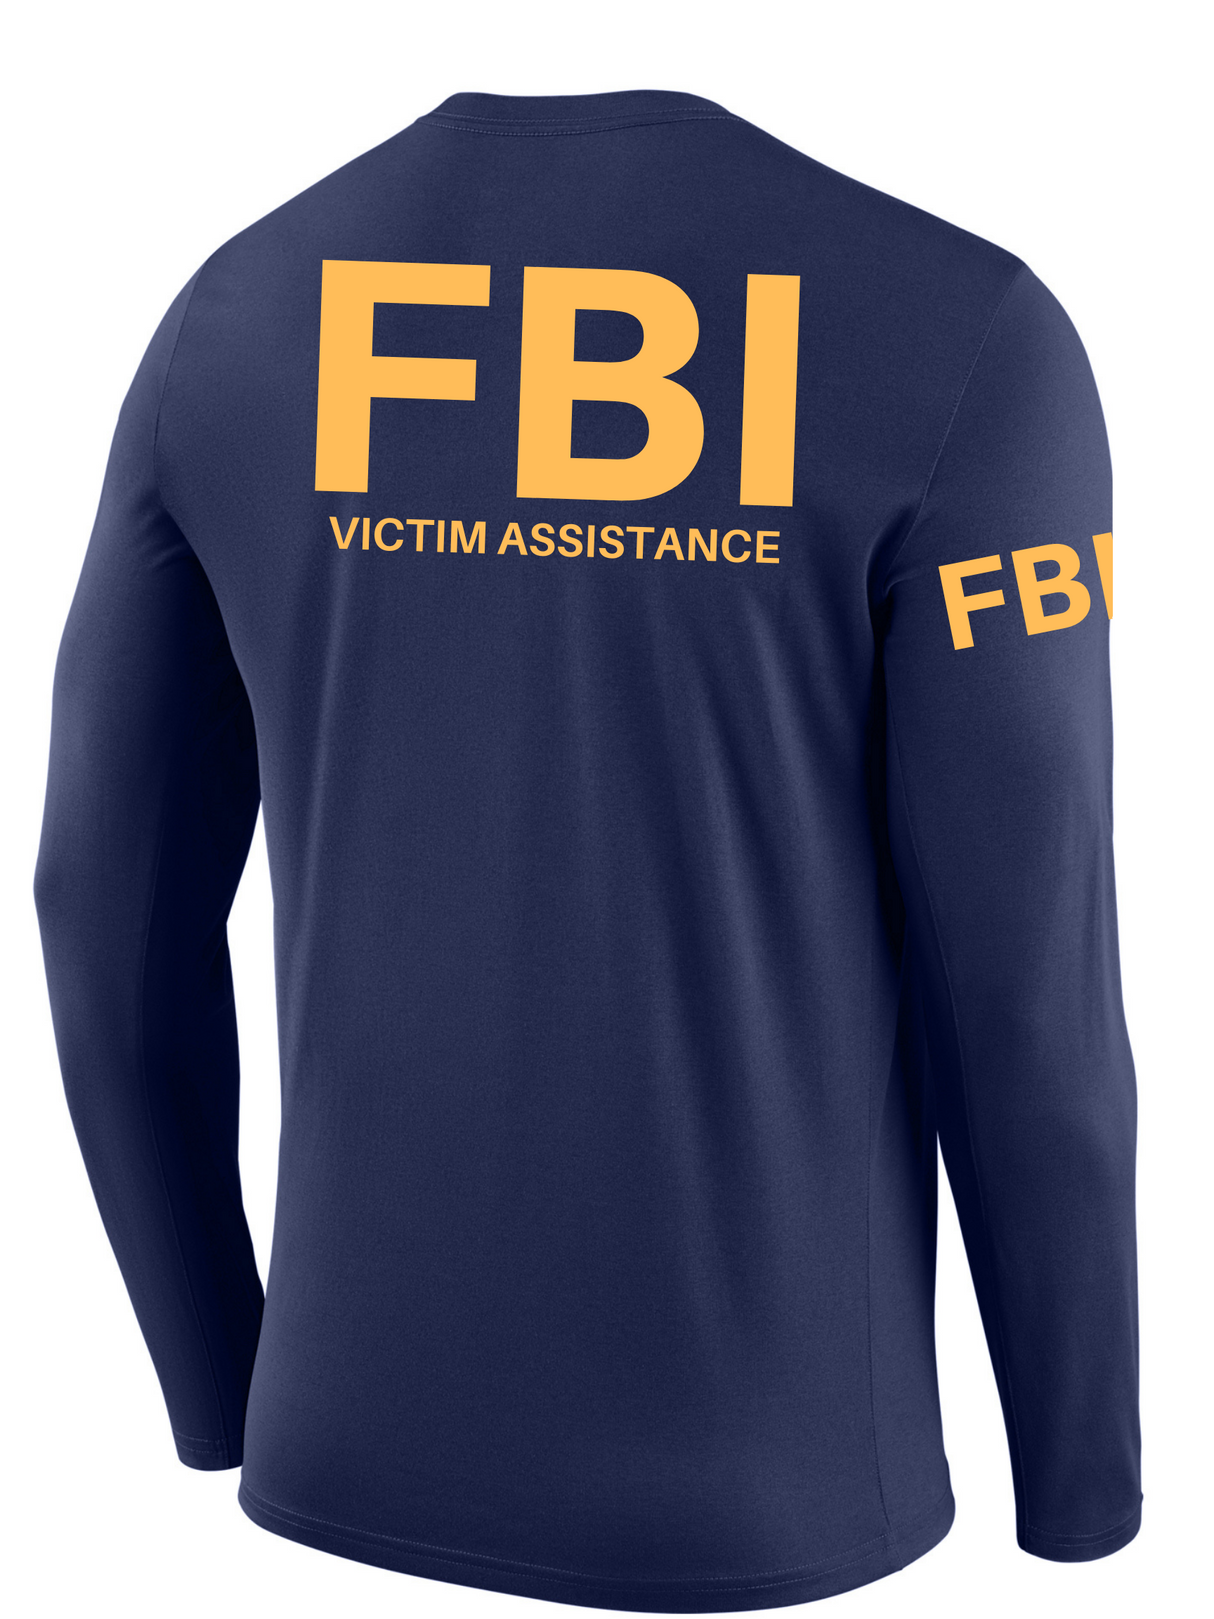 FBI Victim Assistance Agency Identifier T Shirt - Long Sleeve - FEDS Apparel